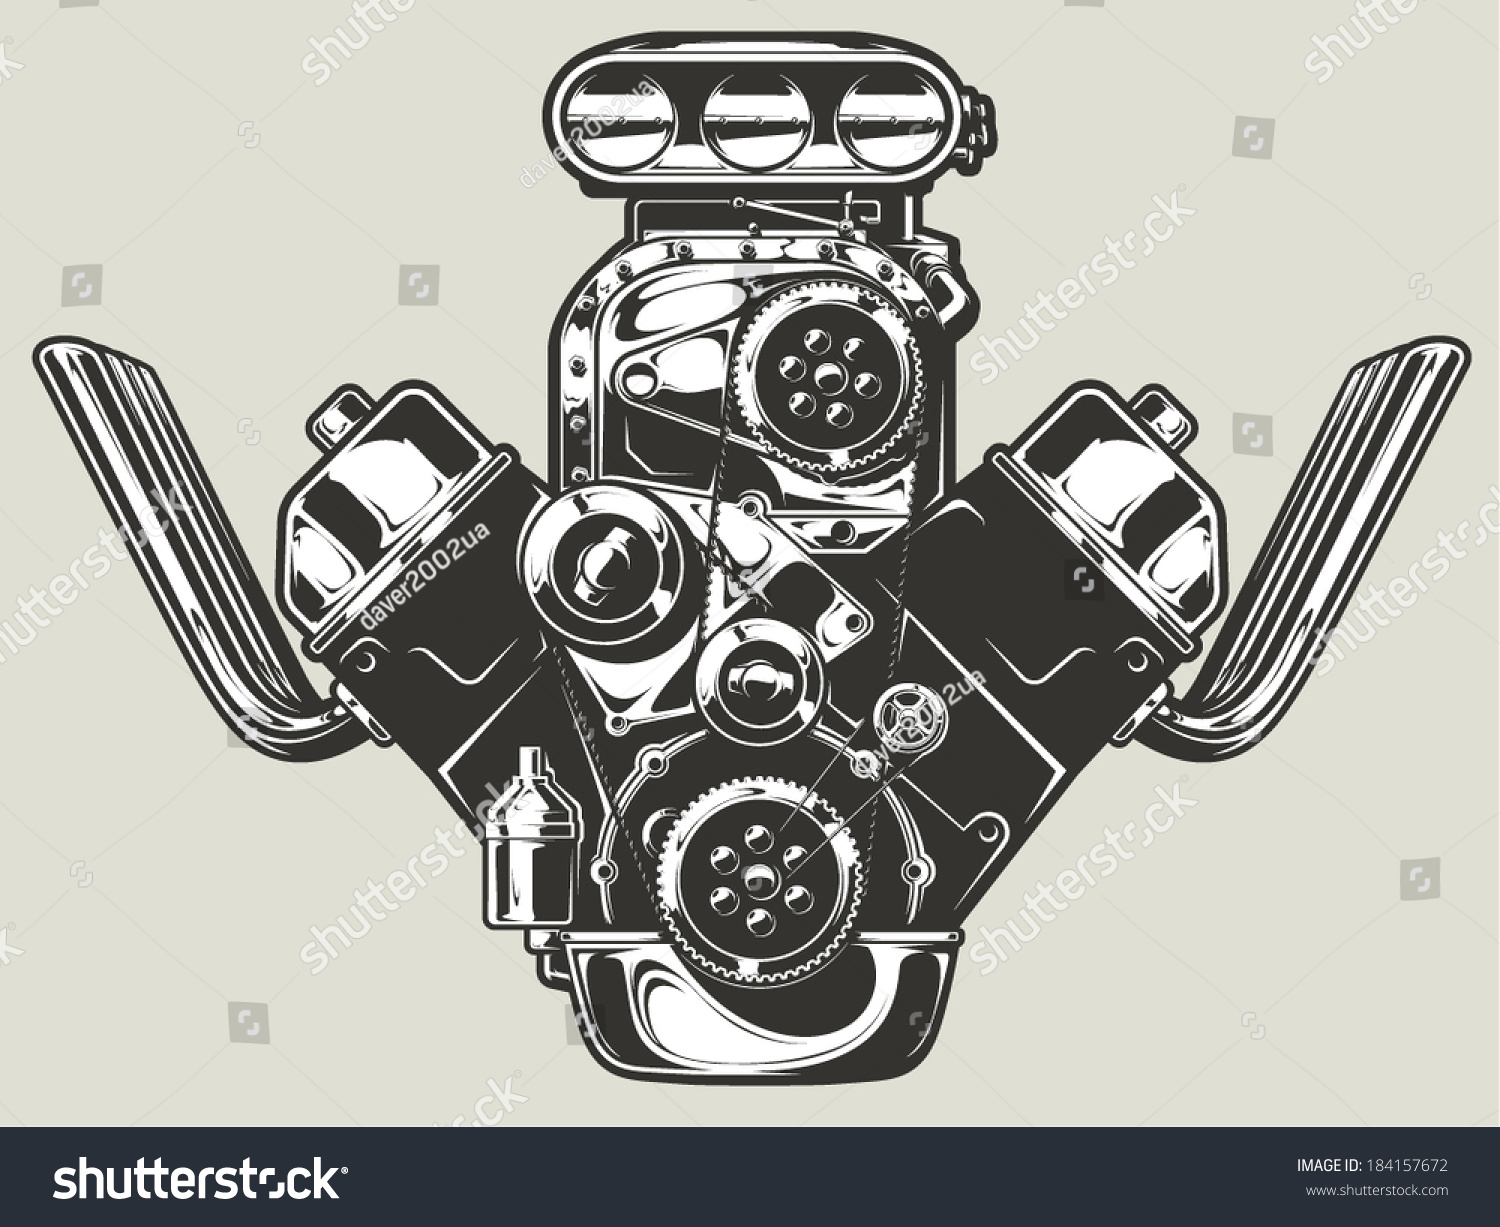 car engine clip art free - photo #48